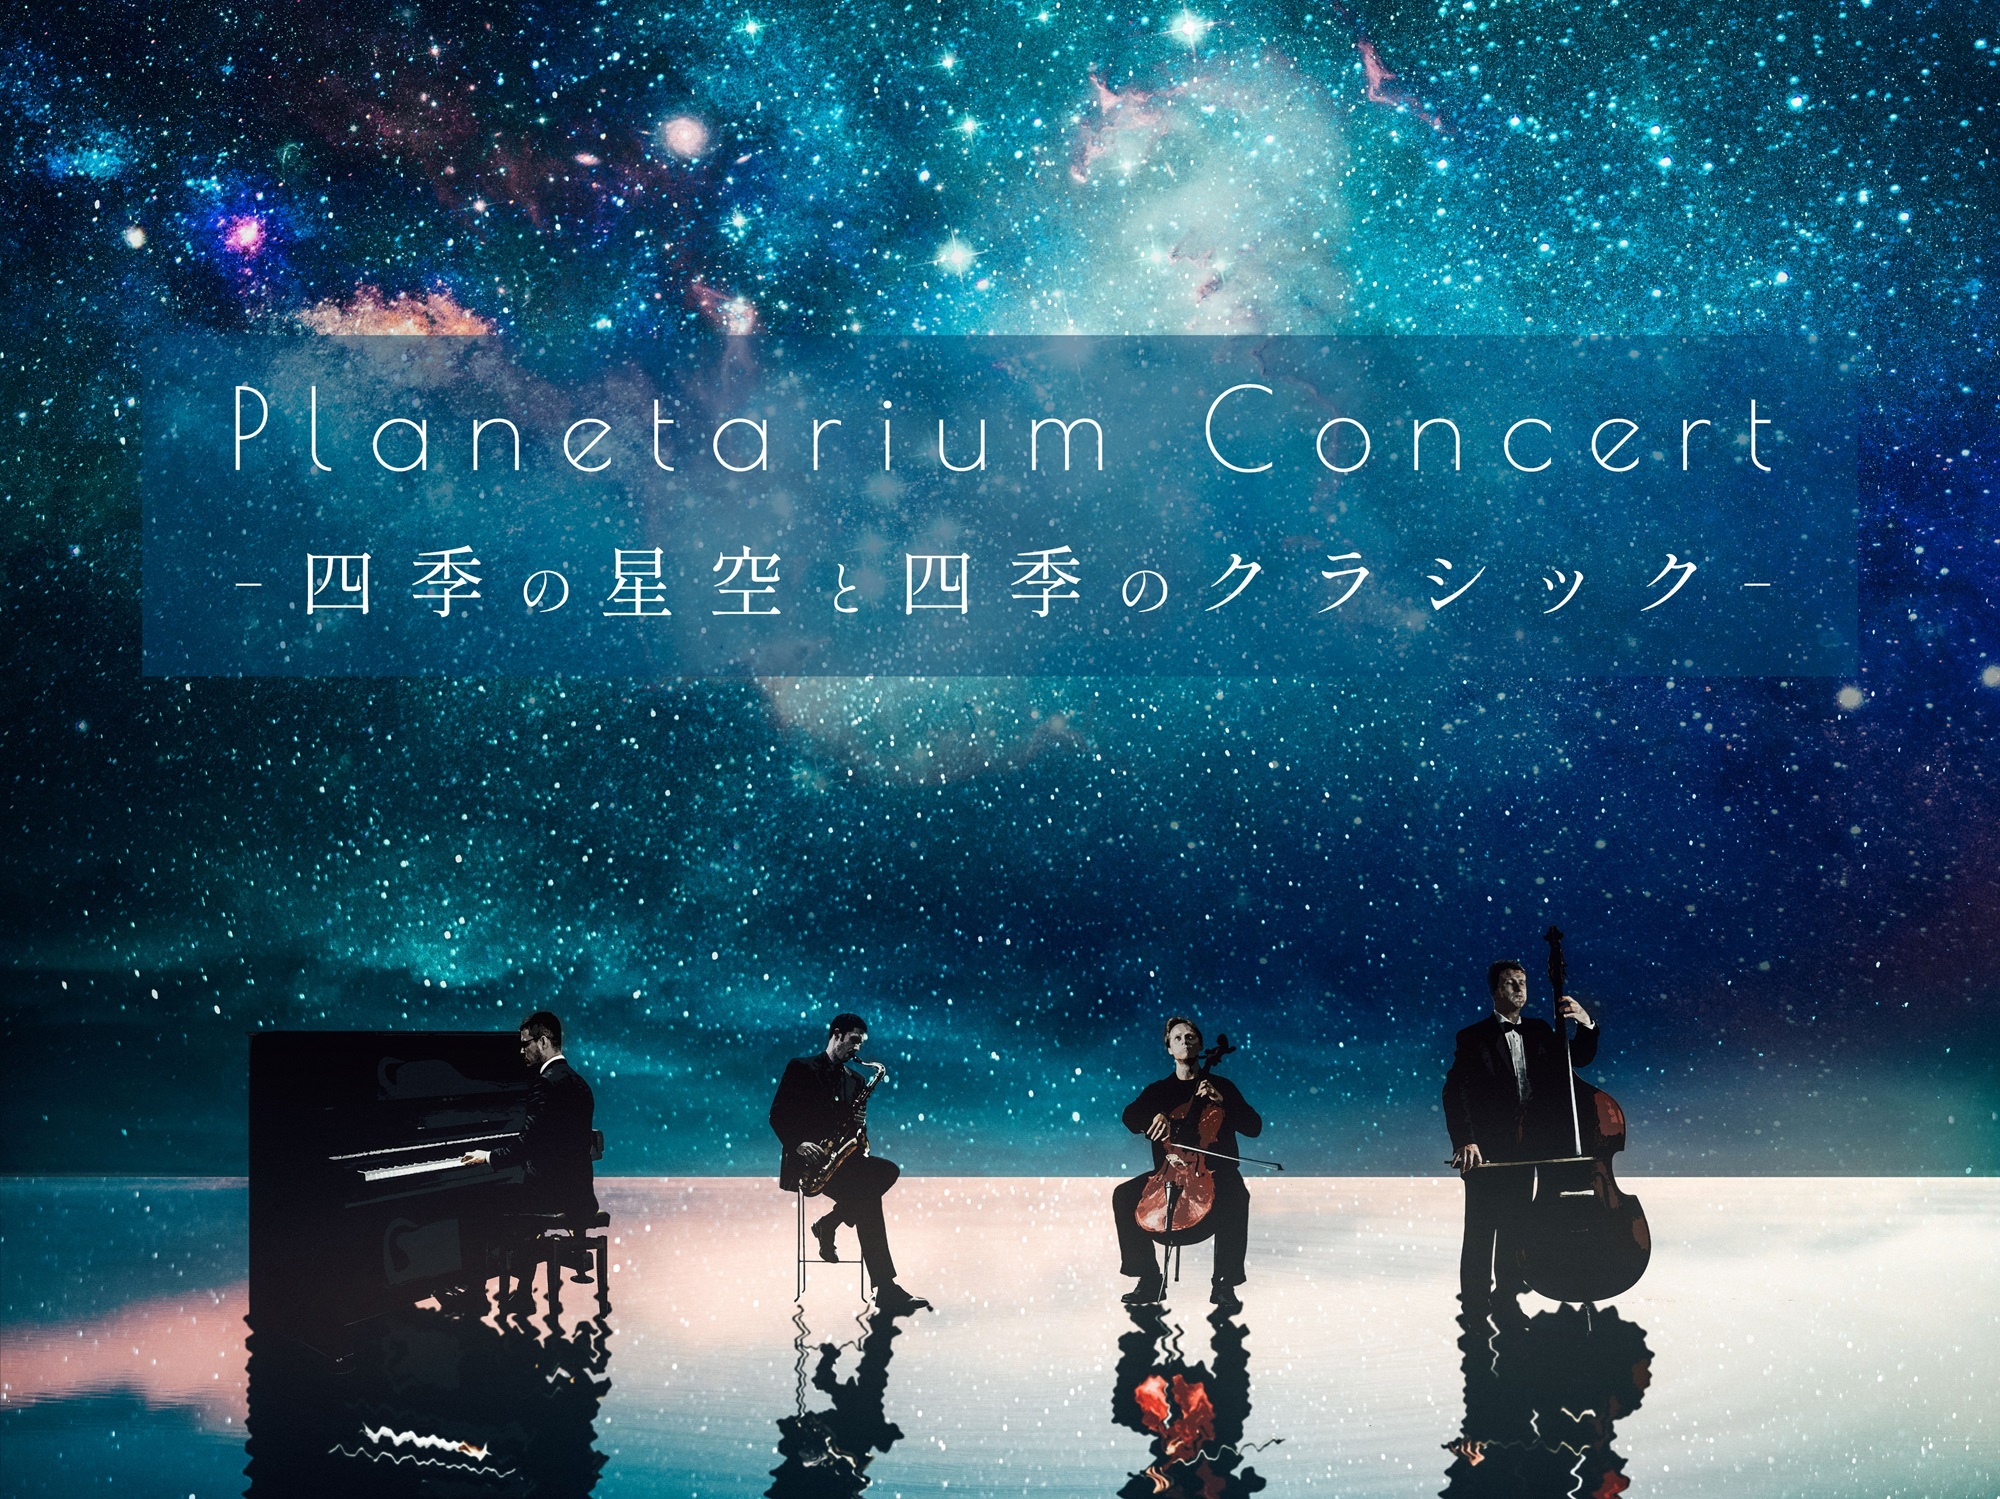 vl^EŃzXguؐvhrbV[ǔv̐tyށwPlanetarium Concert -lG̐ƎlG̃NVbN-x